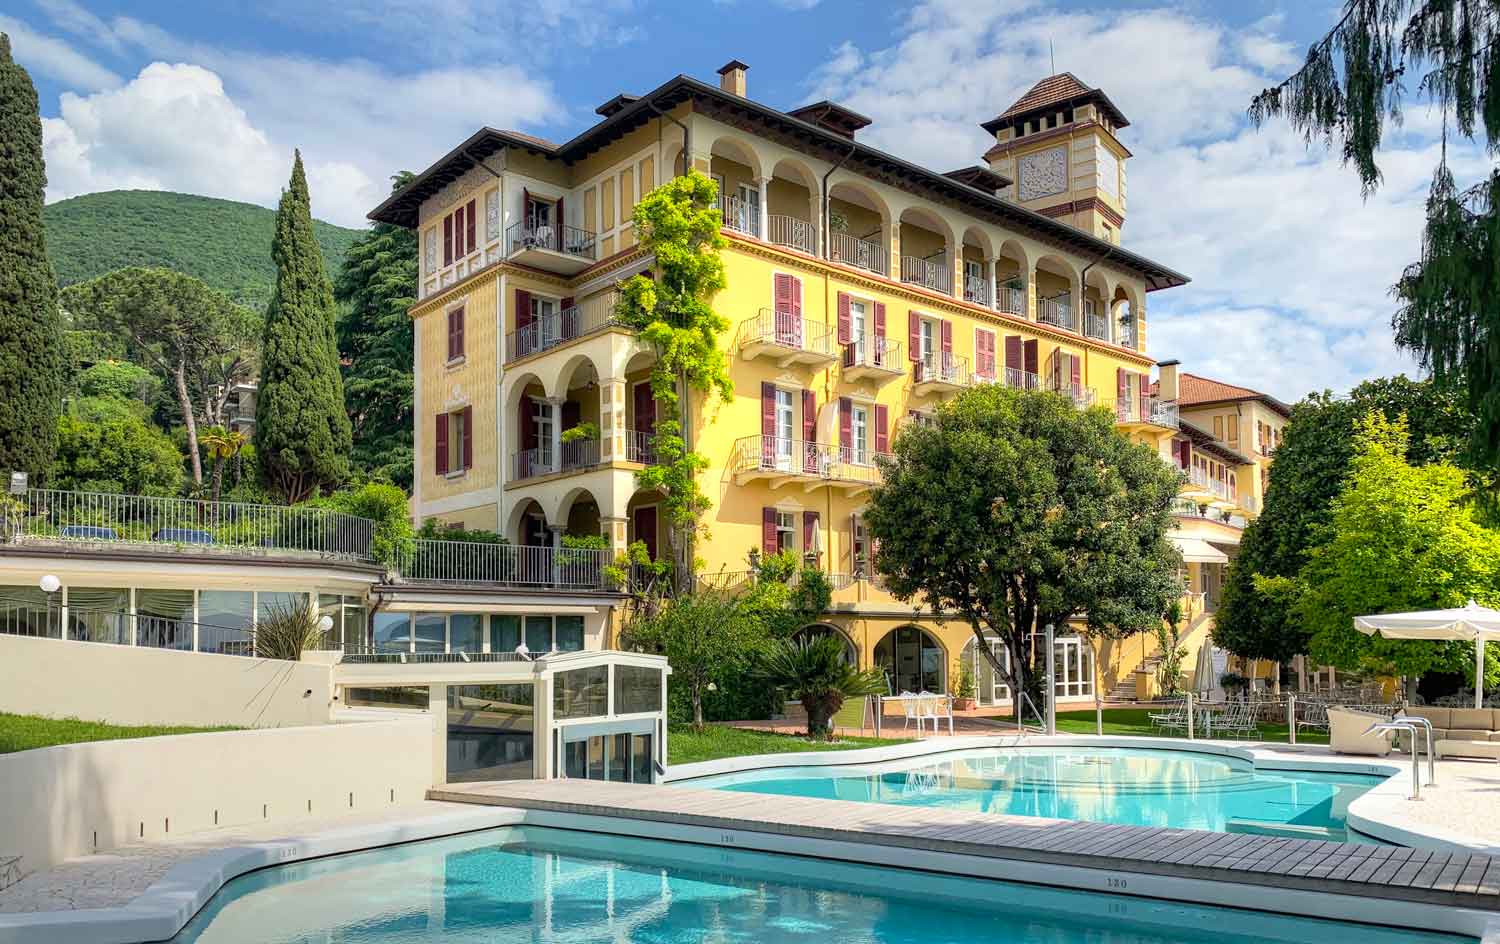 Grand Hotel Fasano, Verona : Five Star Alliance